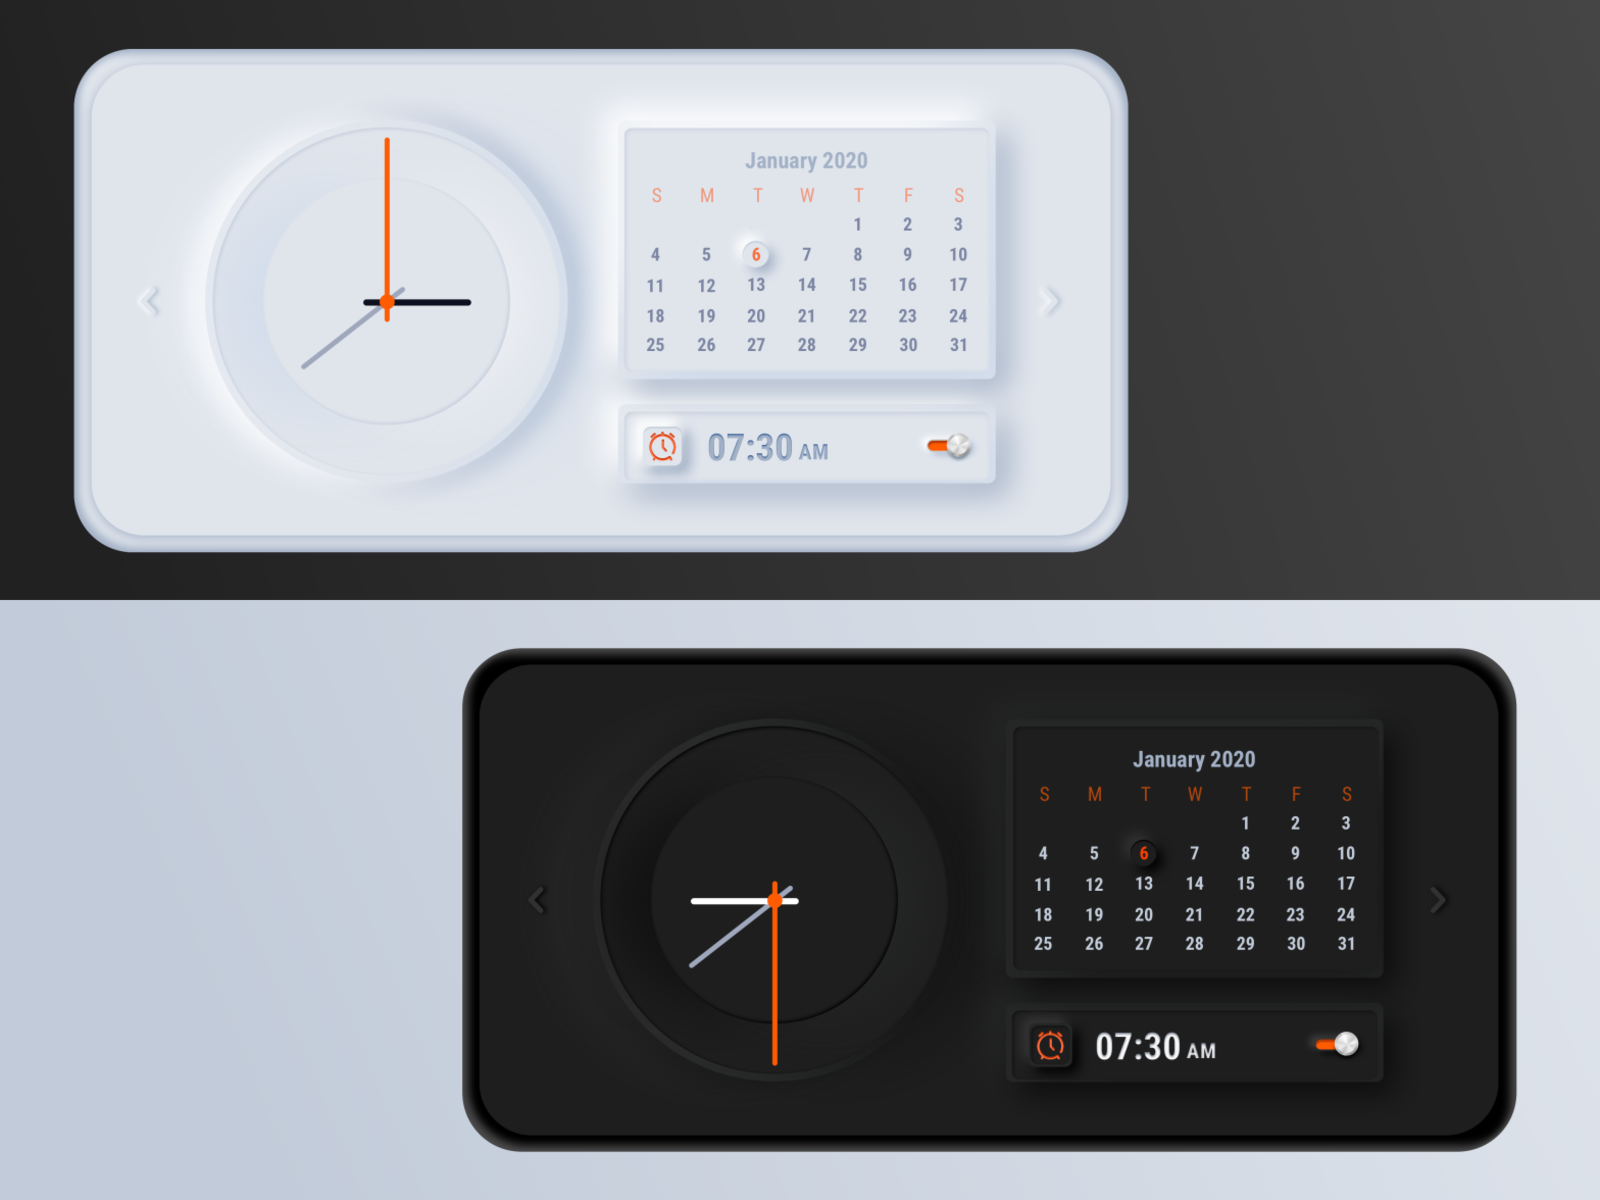 Clocks calendar widgets by Jas Chen on Dribbble